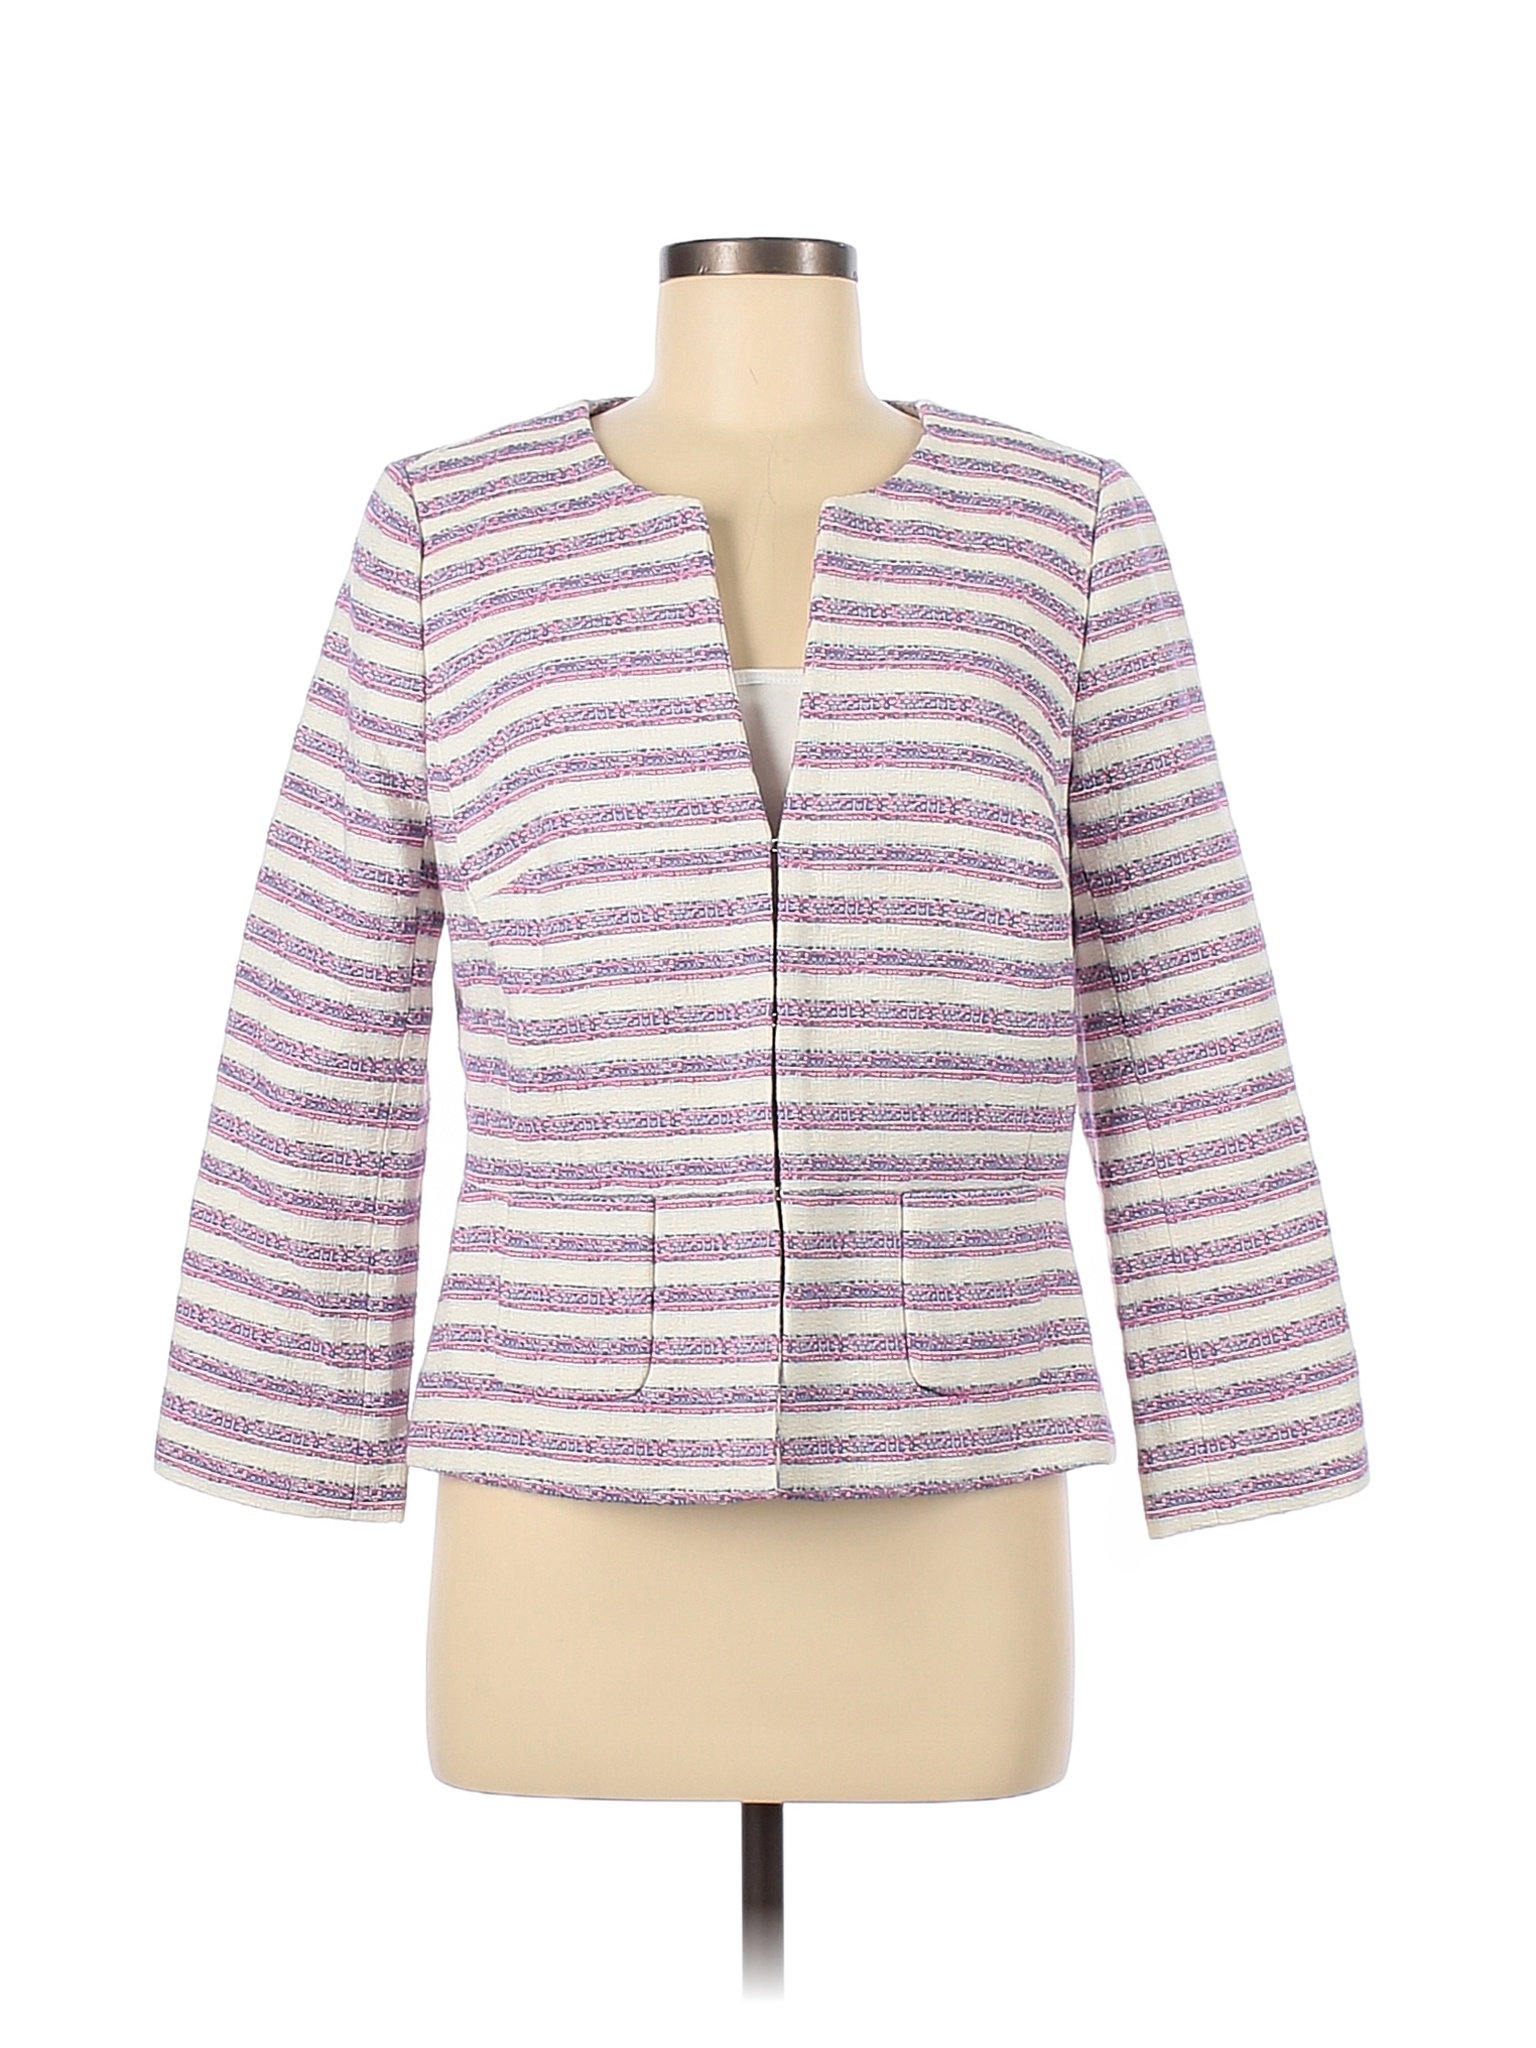 Talbots Stripes Pink Jacket Size 6 - 74% off | thredUP